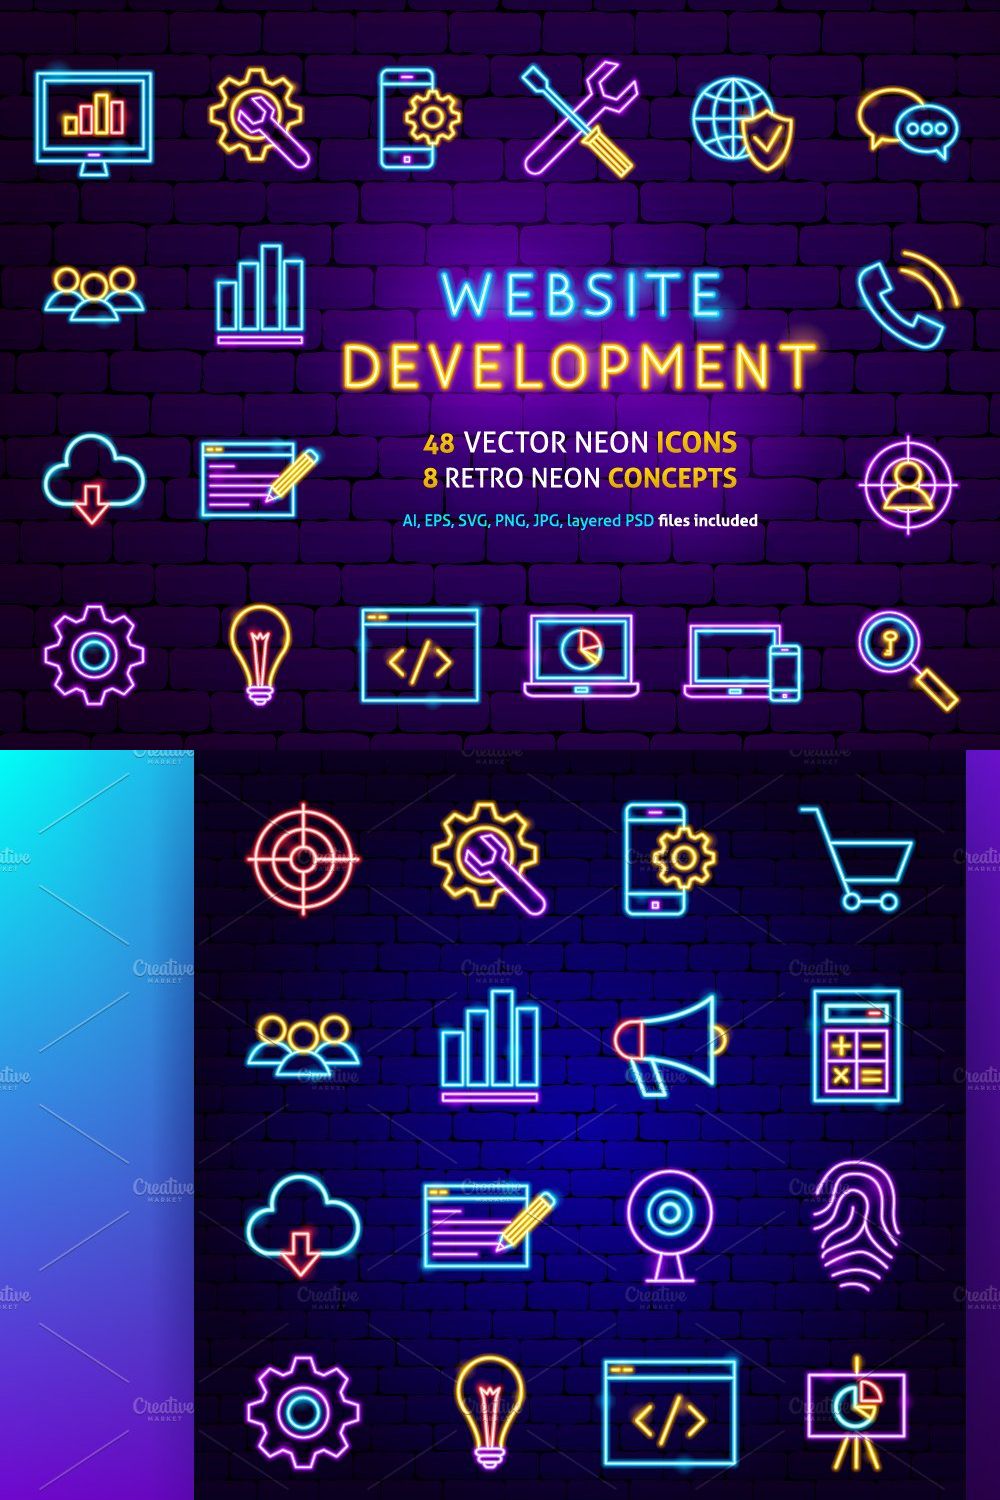 Web Development SEO Neon Icons Set pinterest preview image.